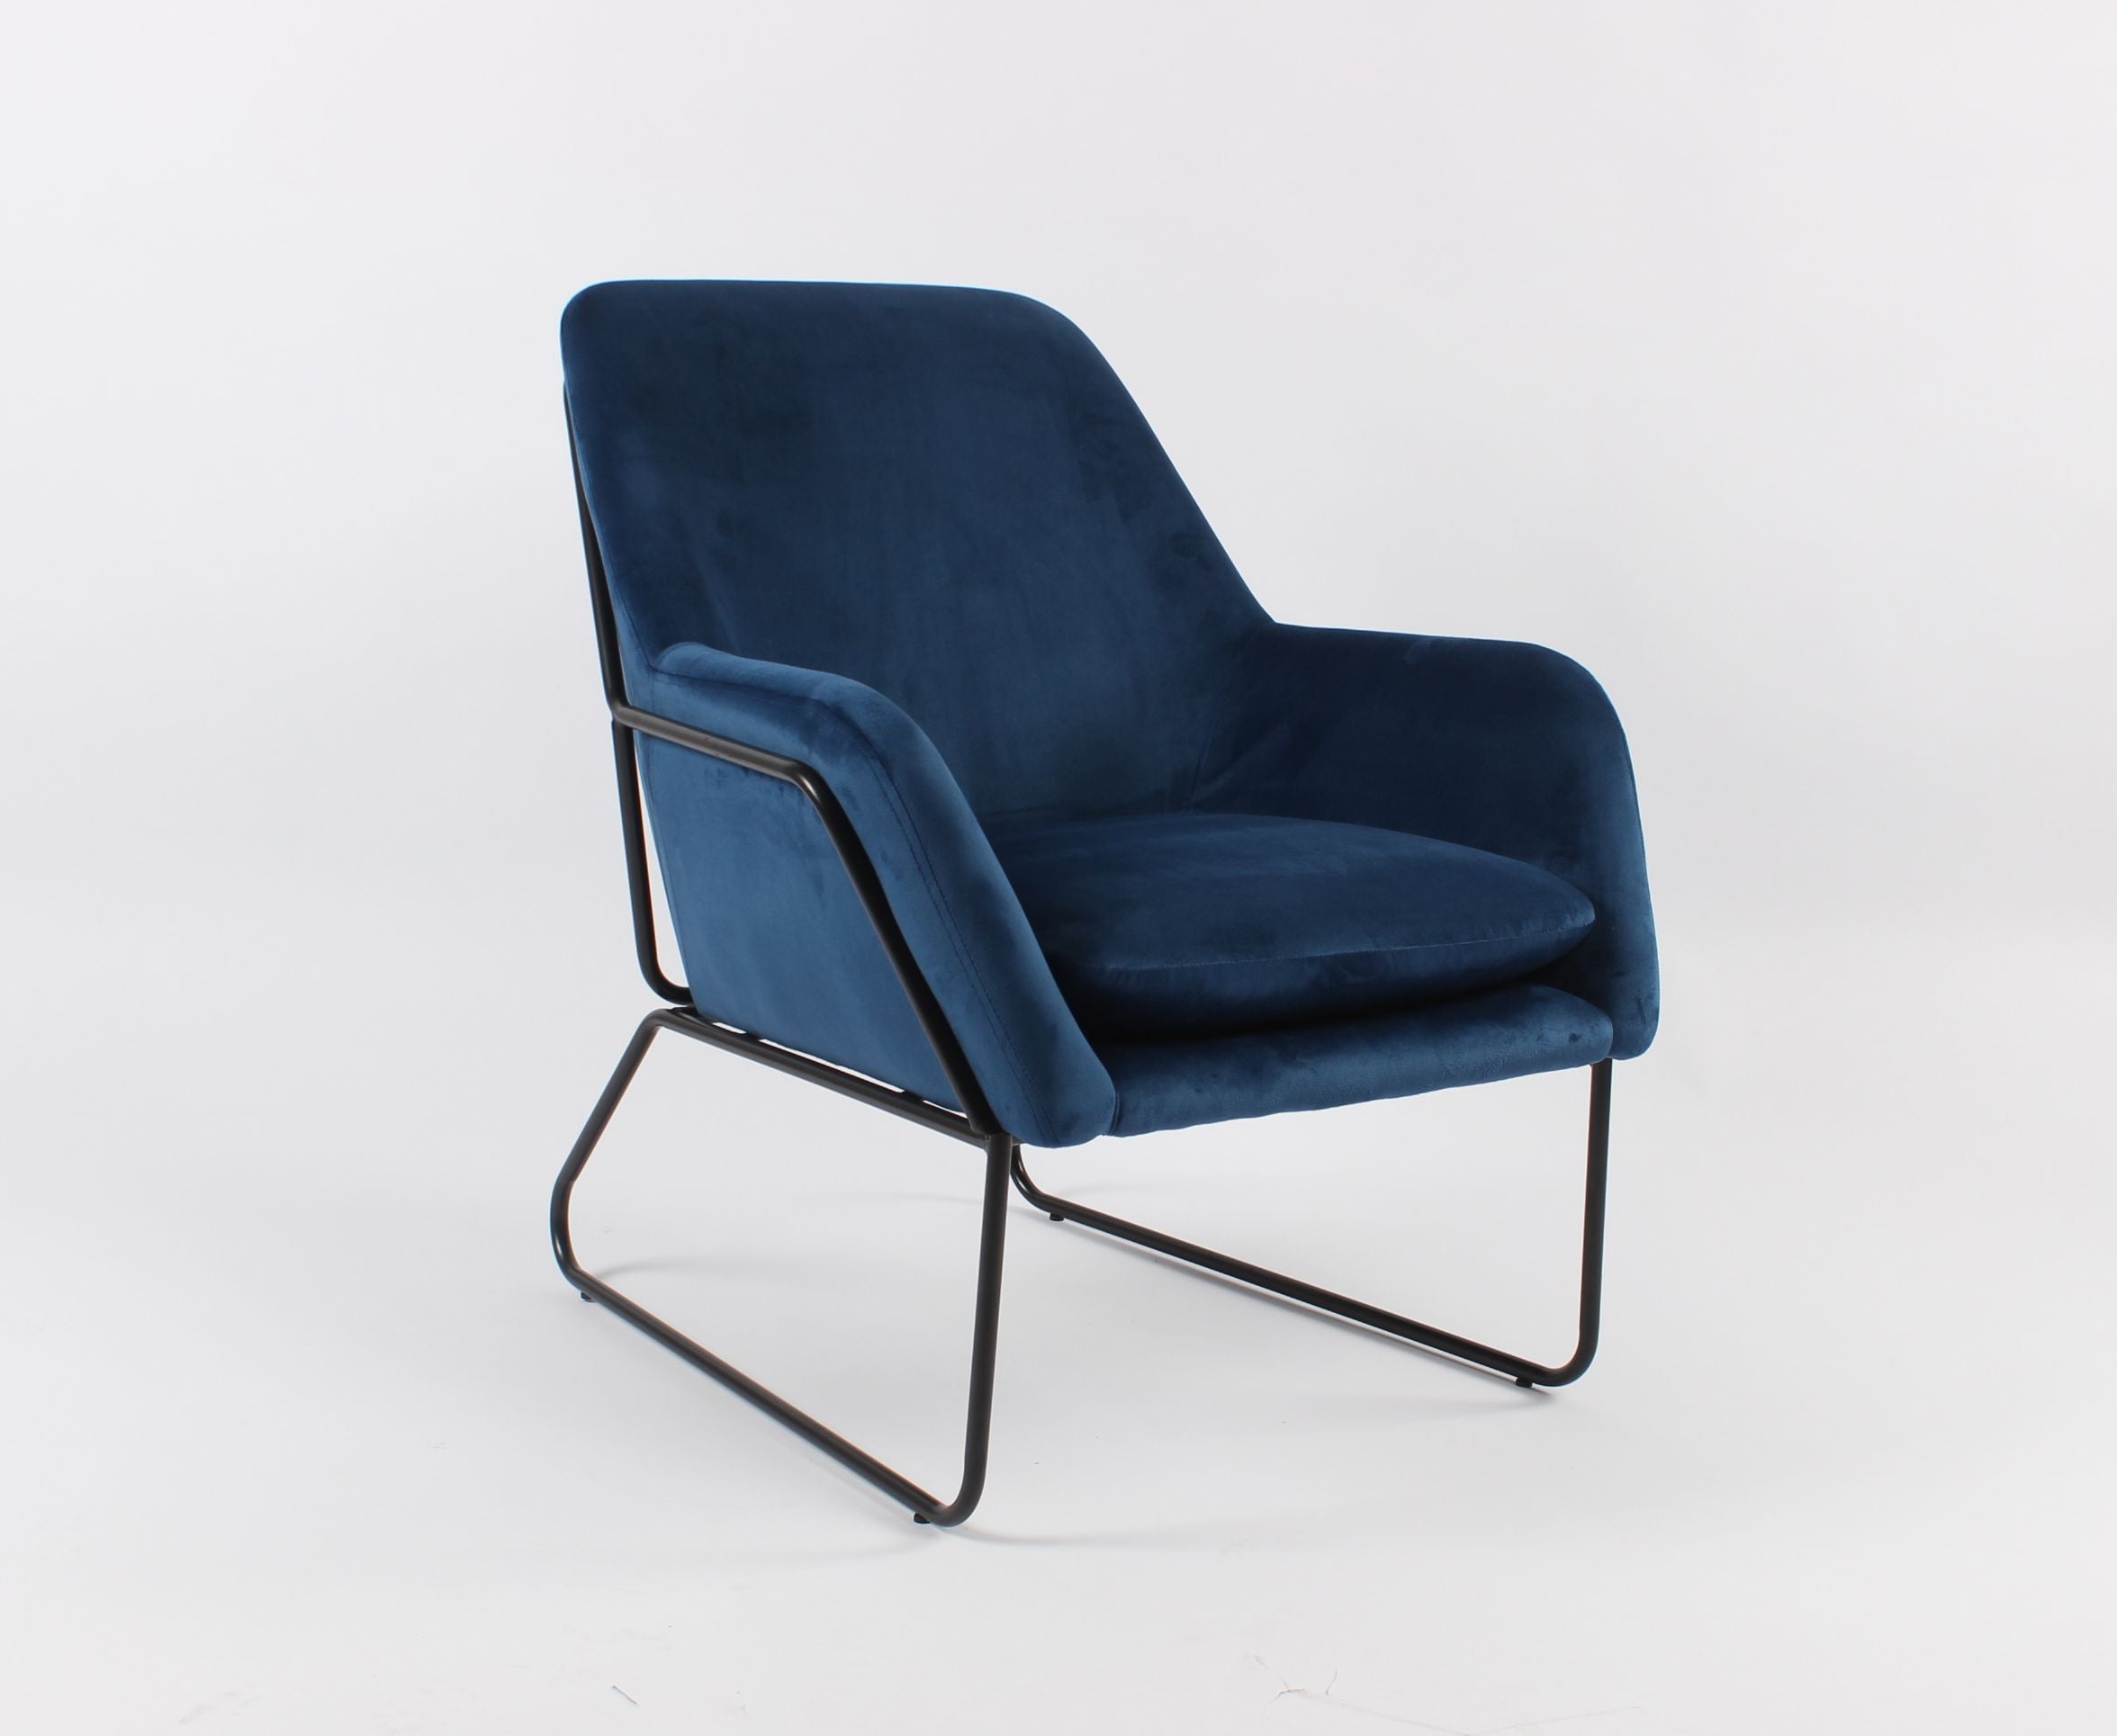  blue accent chair